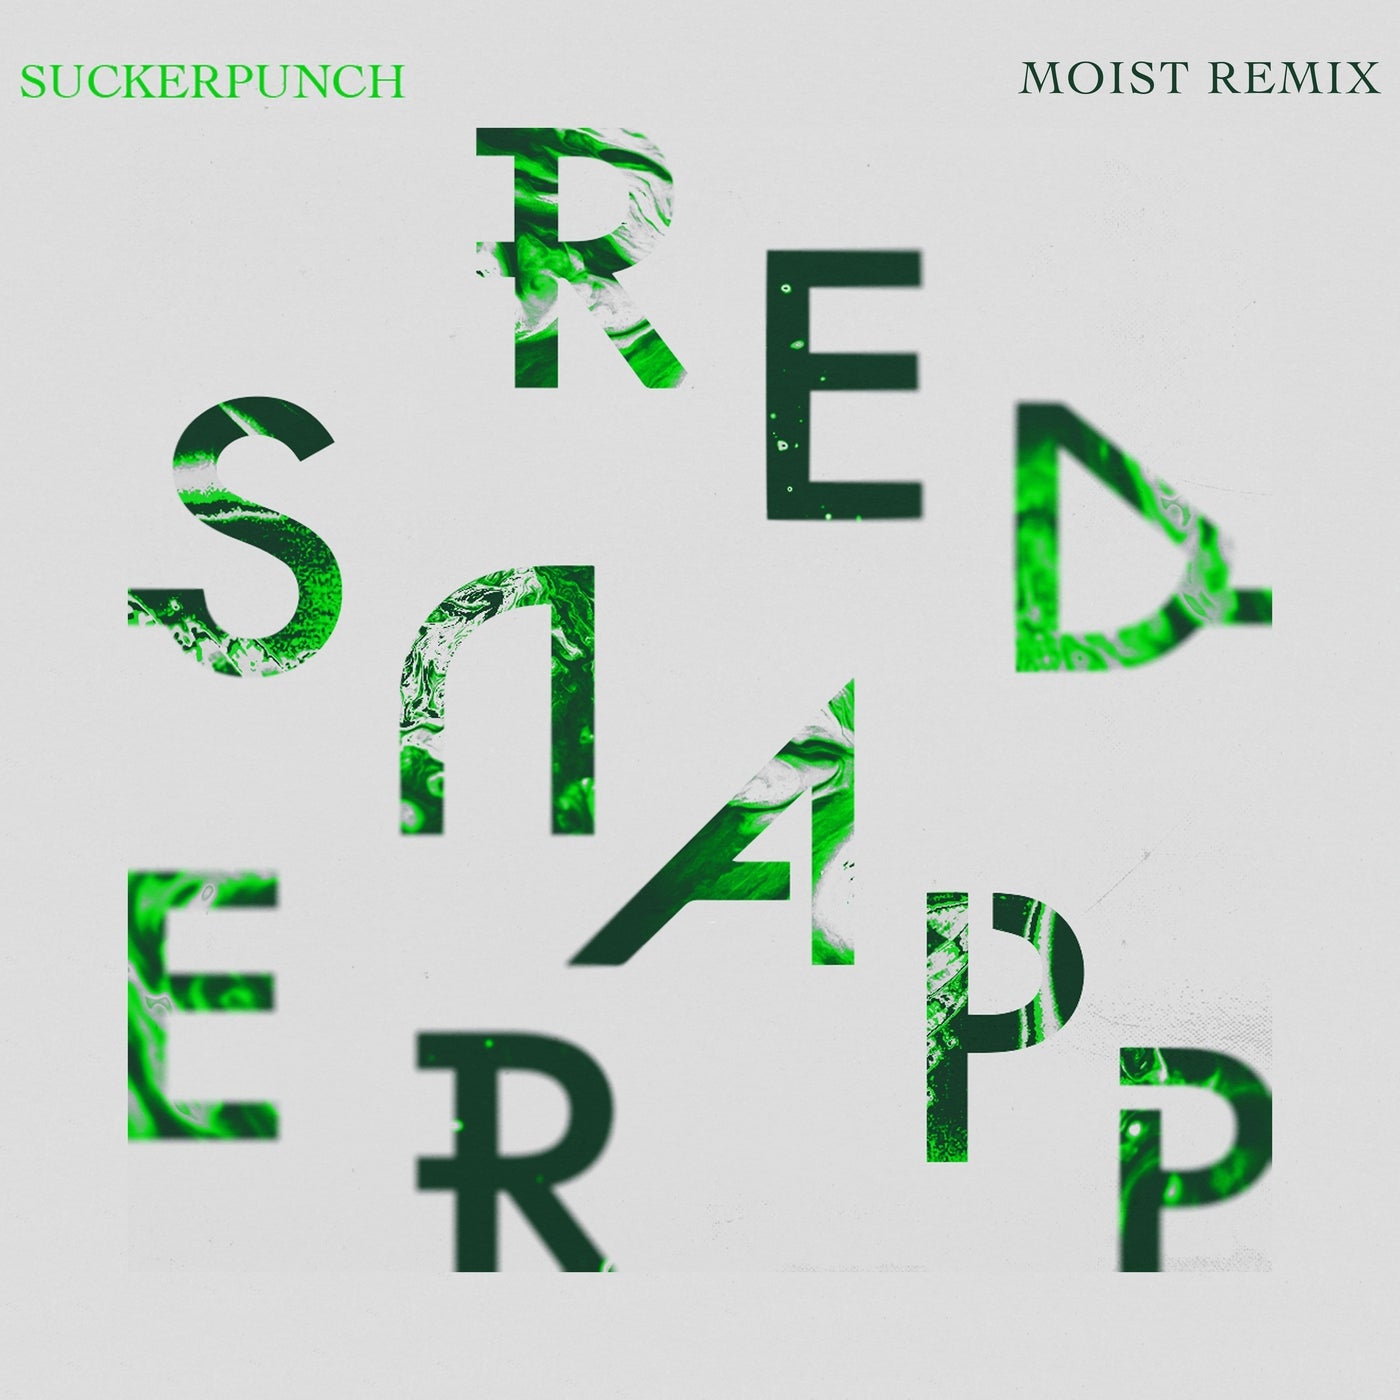 Suckerpunch (Live at The Moth Club) (Moist Remix)